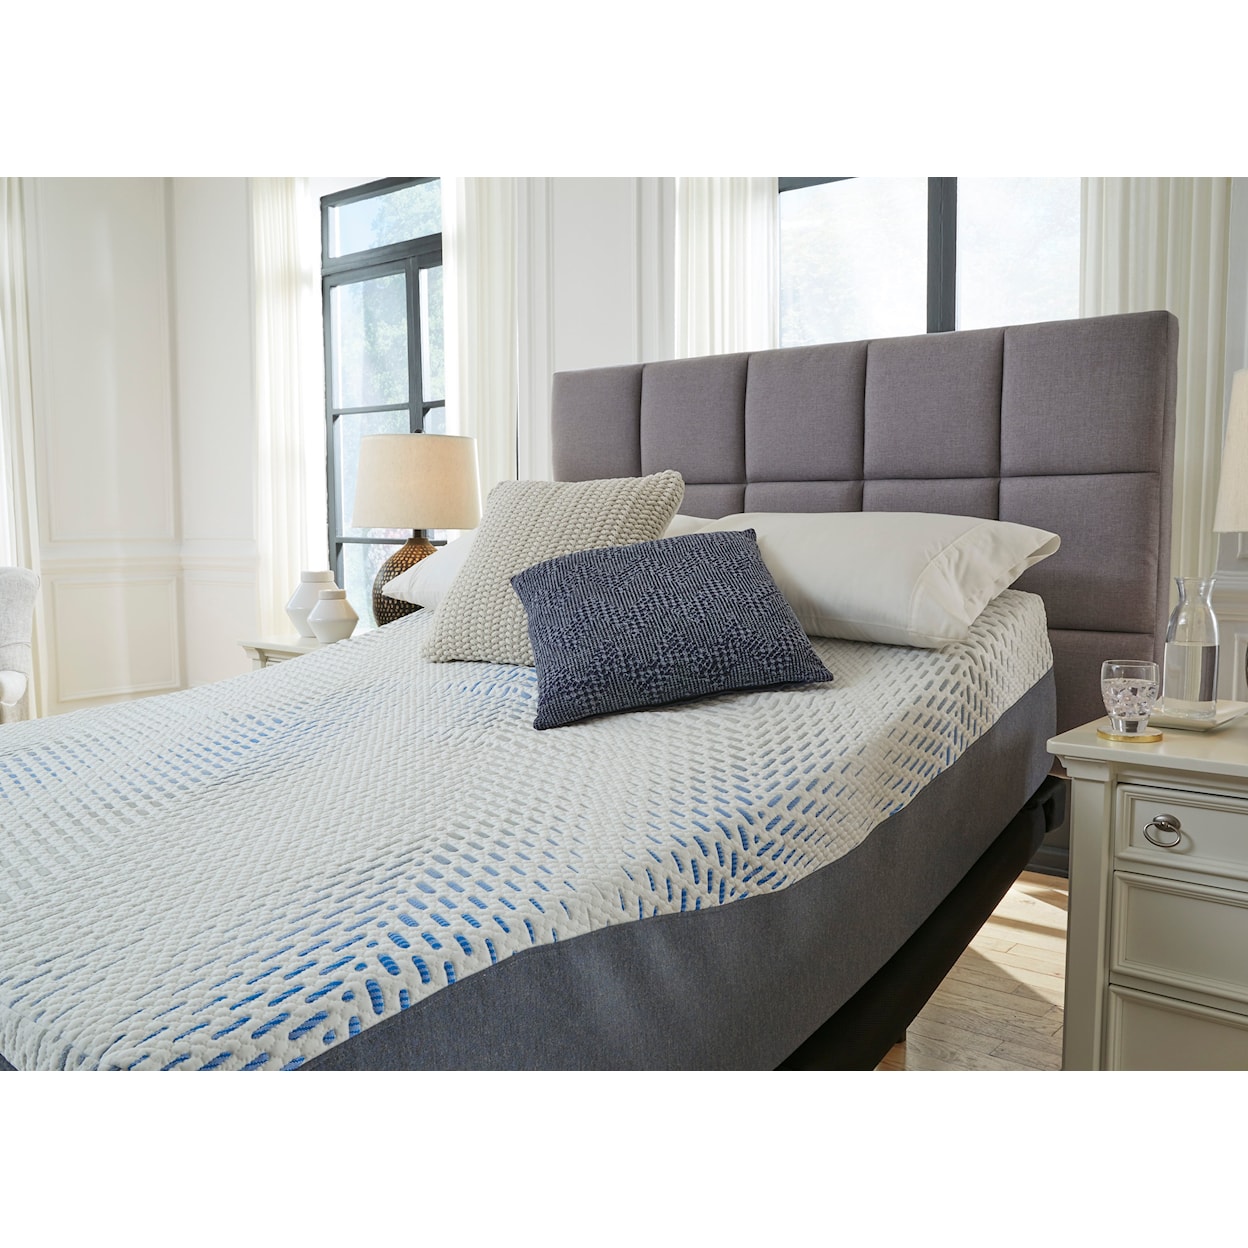 Sierra Sleep Millenn. Luxury Gel Latex and Mem. Foam Twin XL Cushion Firm Mattress